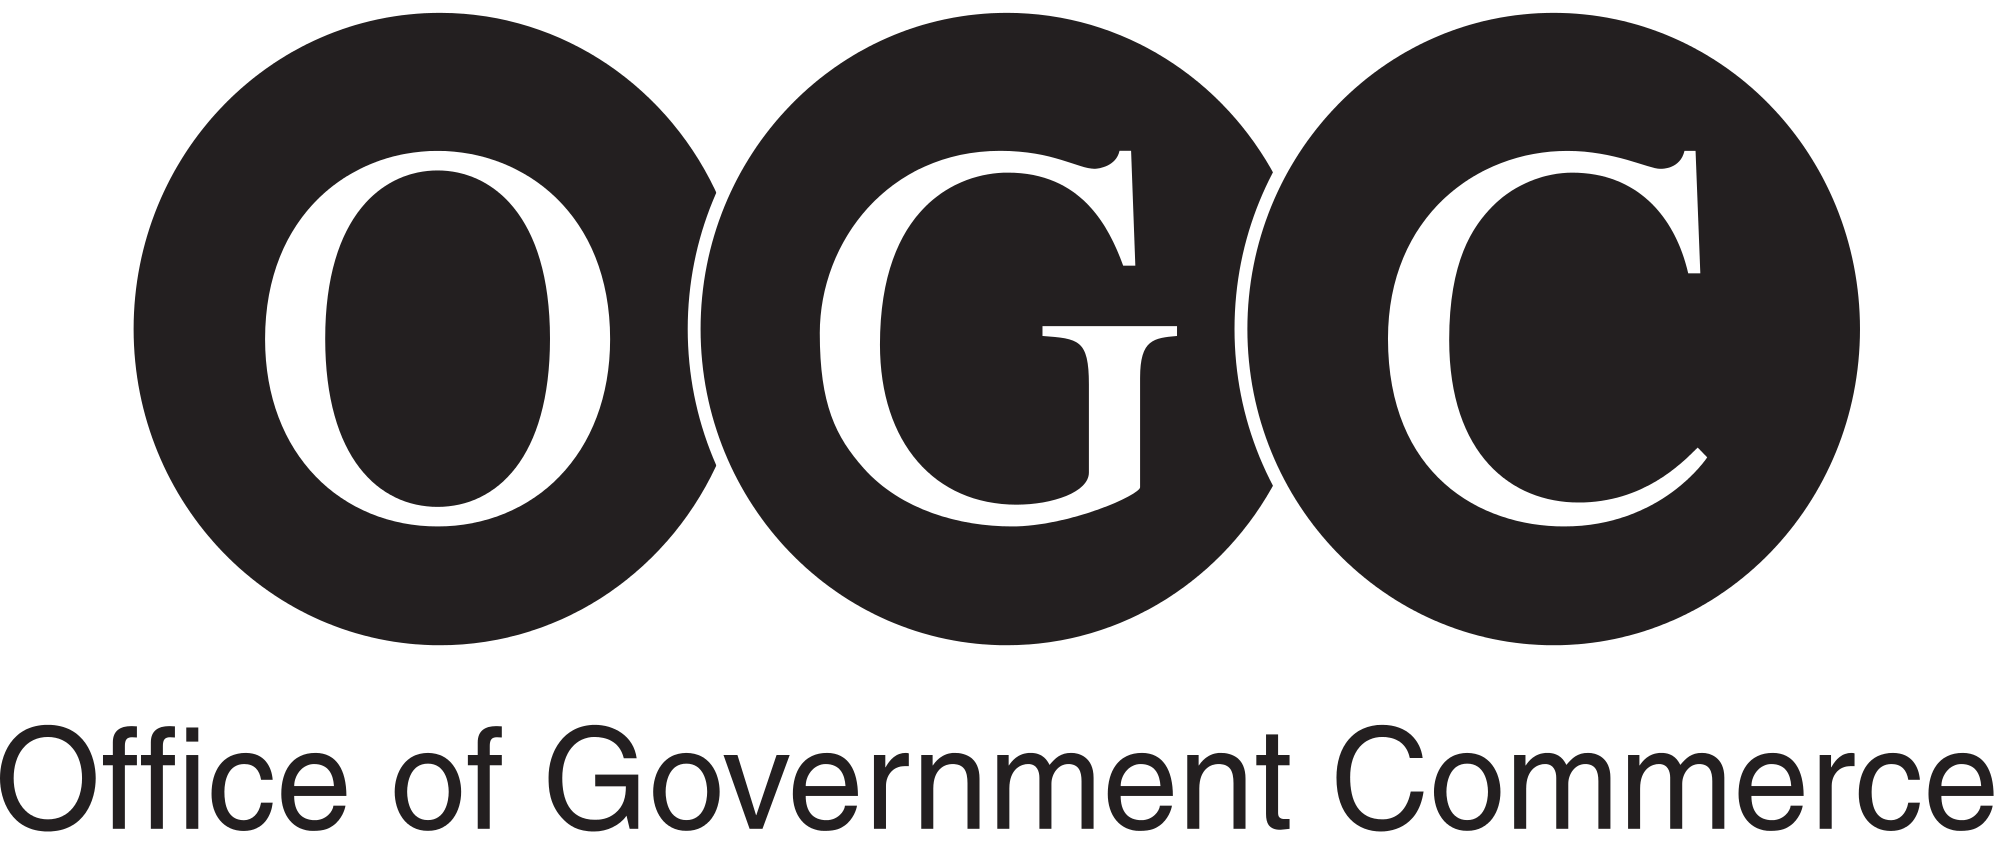 OGC Logo - File:OGC logo.svg - Wikimedia Commons